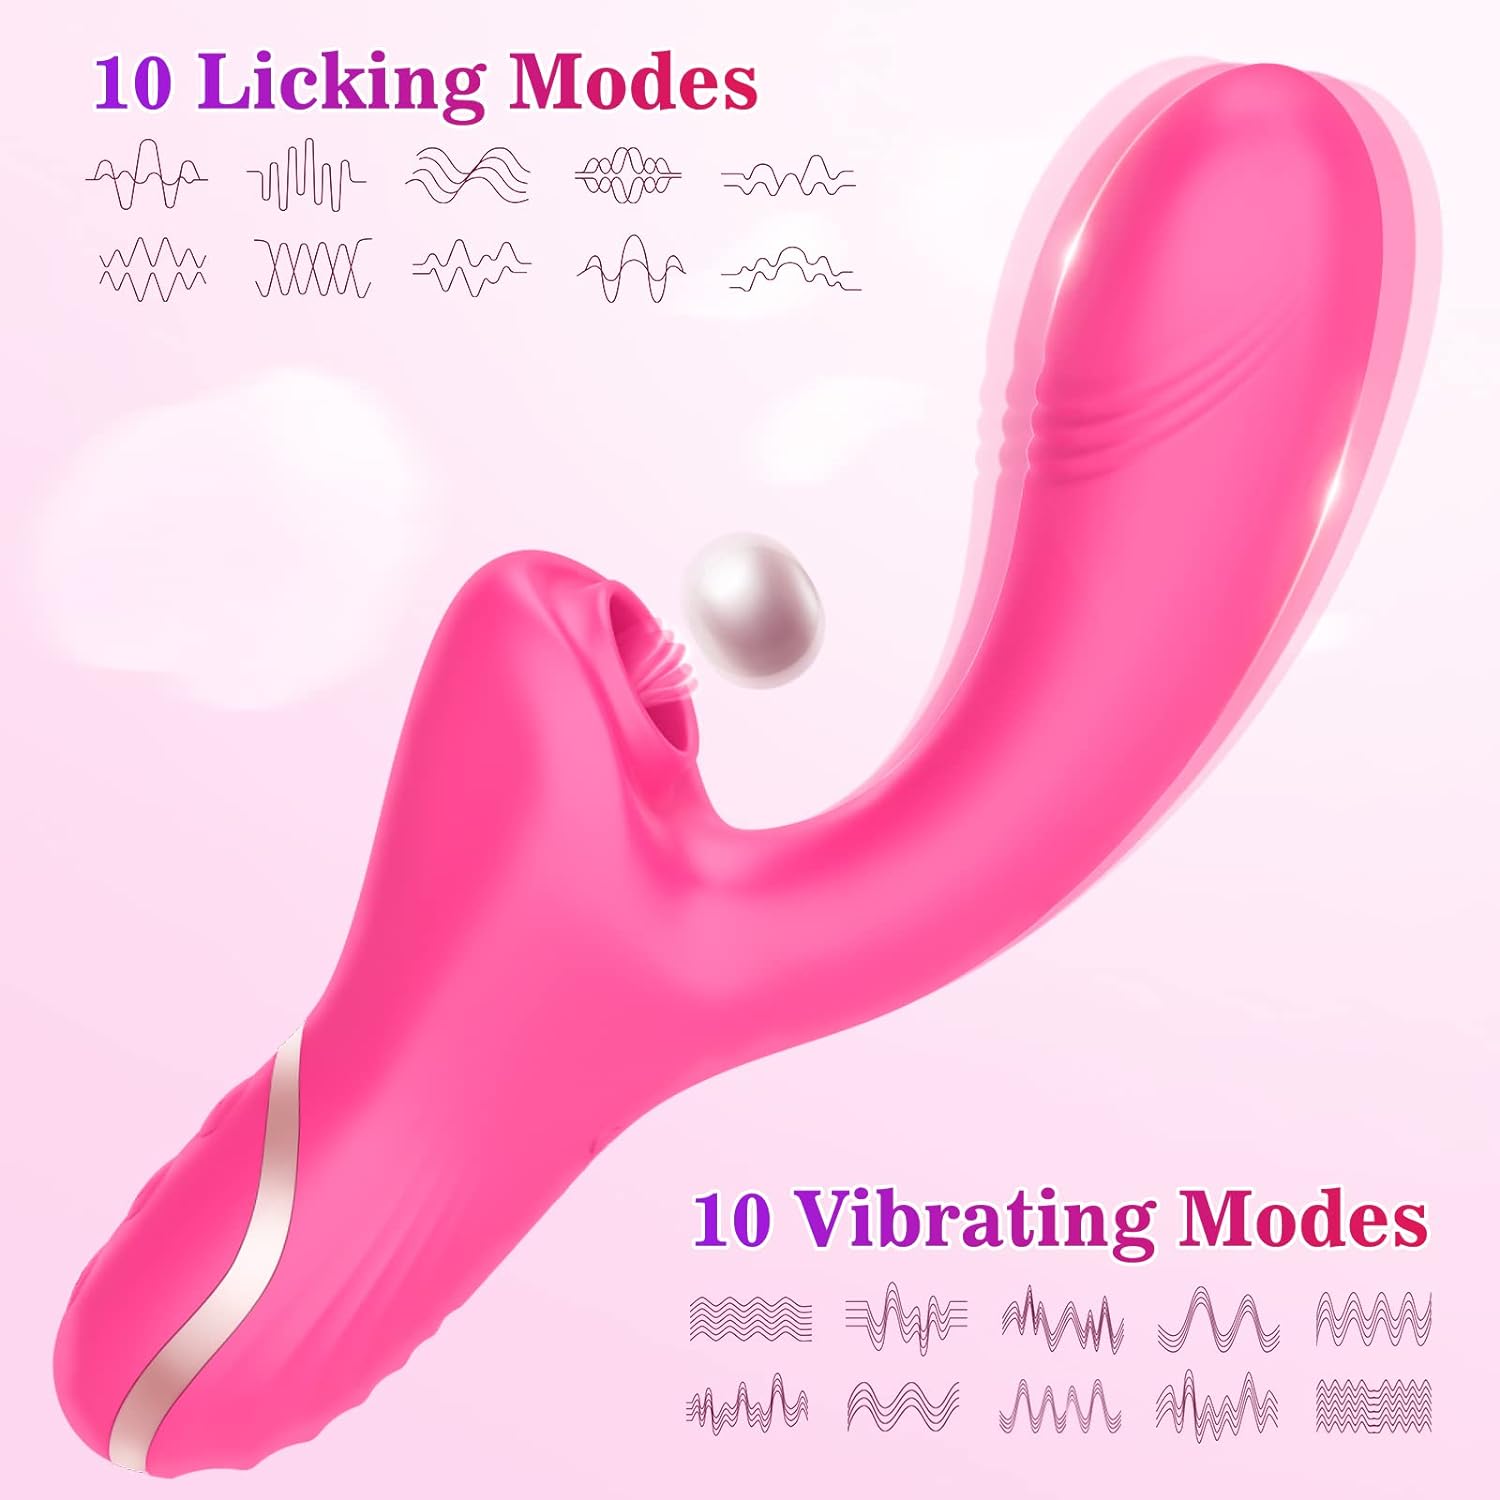 G Spot Vibrator with 10 Licking & Vibrating Modes